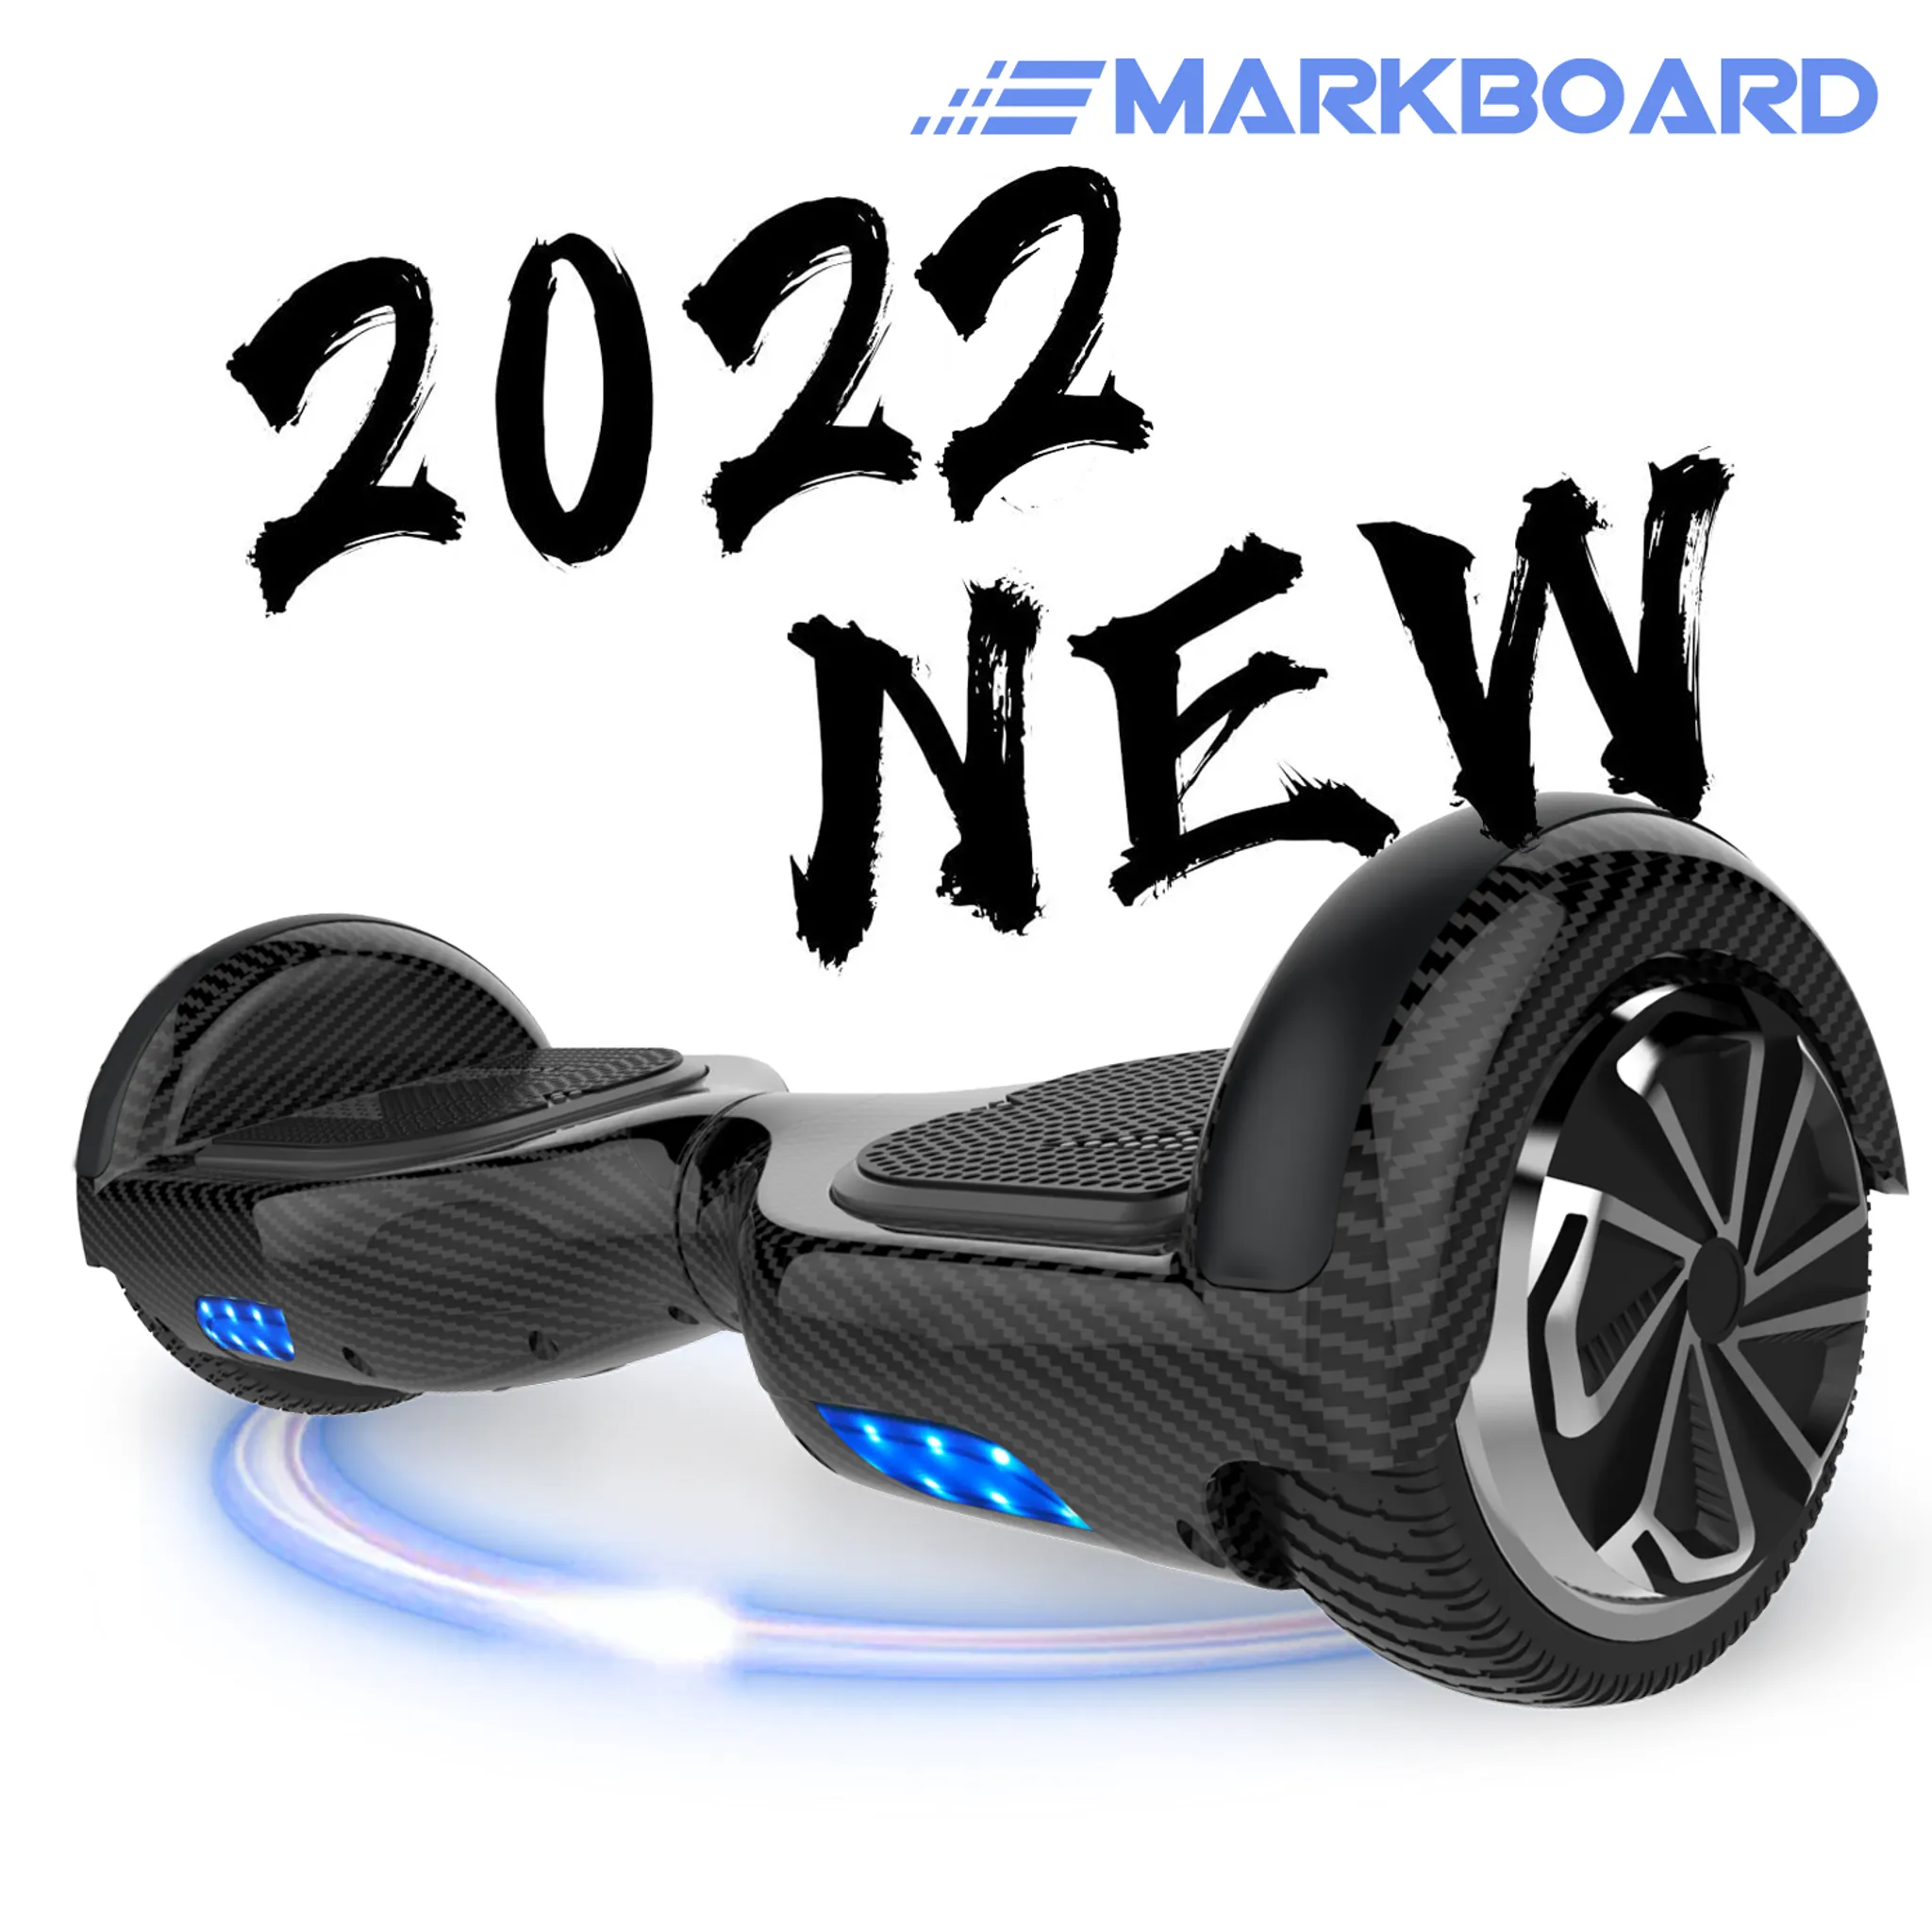 Sitz-Upgrades für Hoverboards: Elektro-Kart statt Balancing-Board